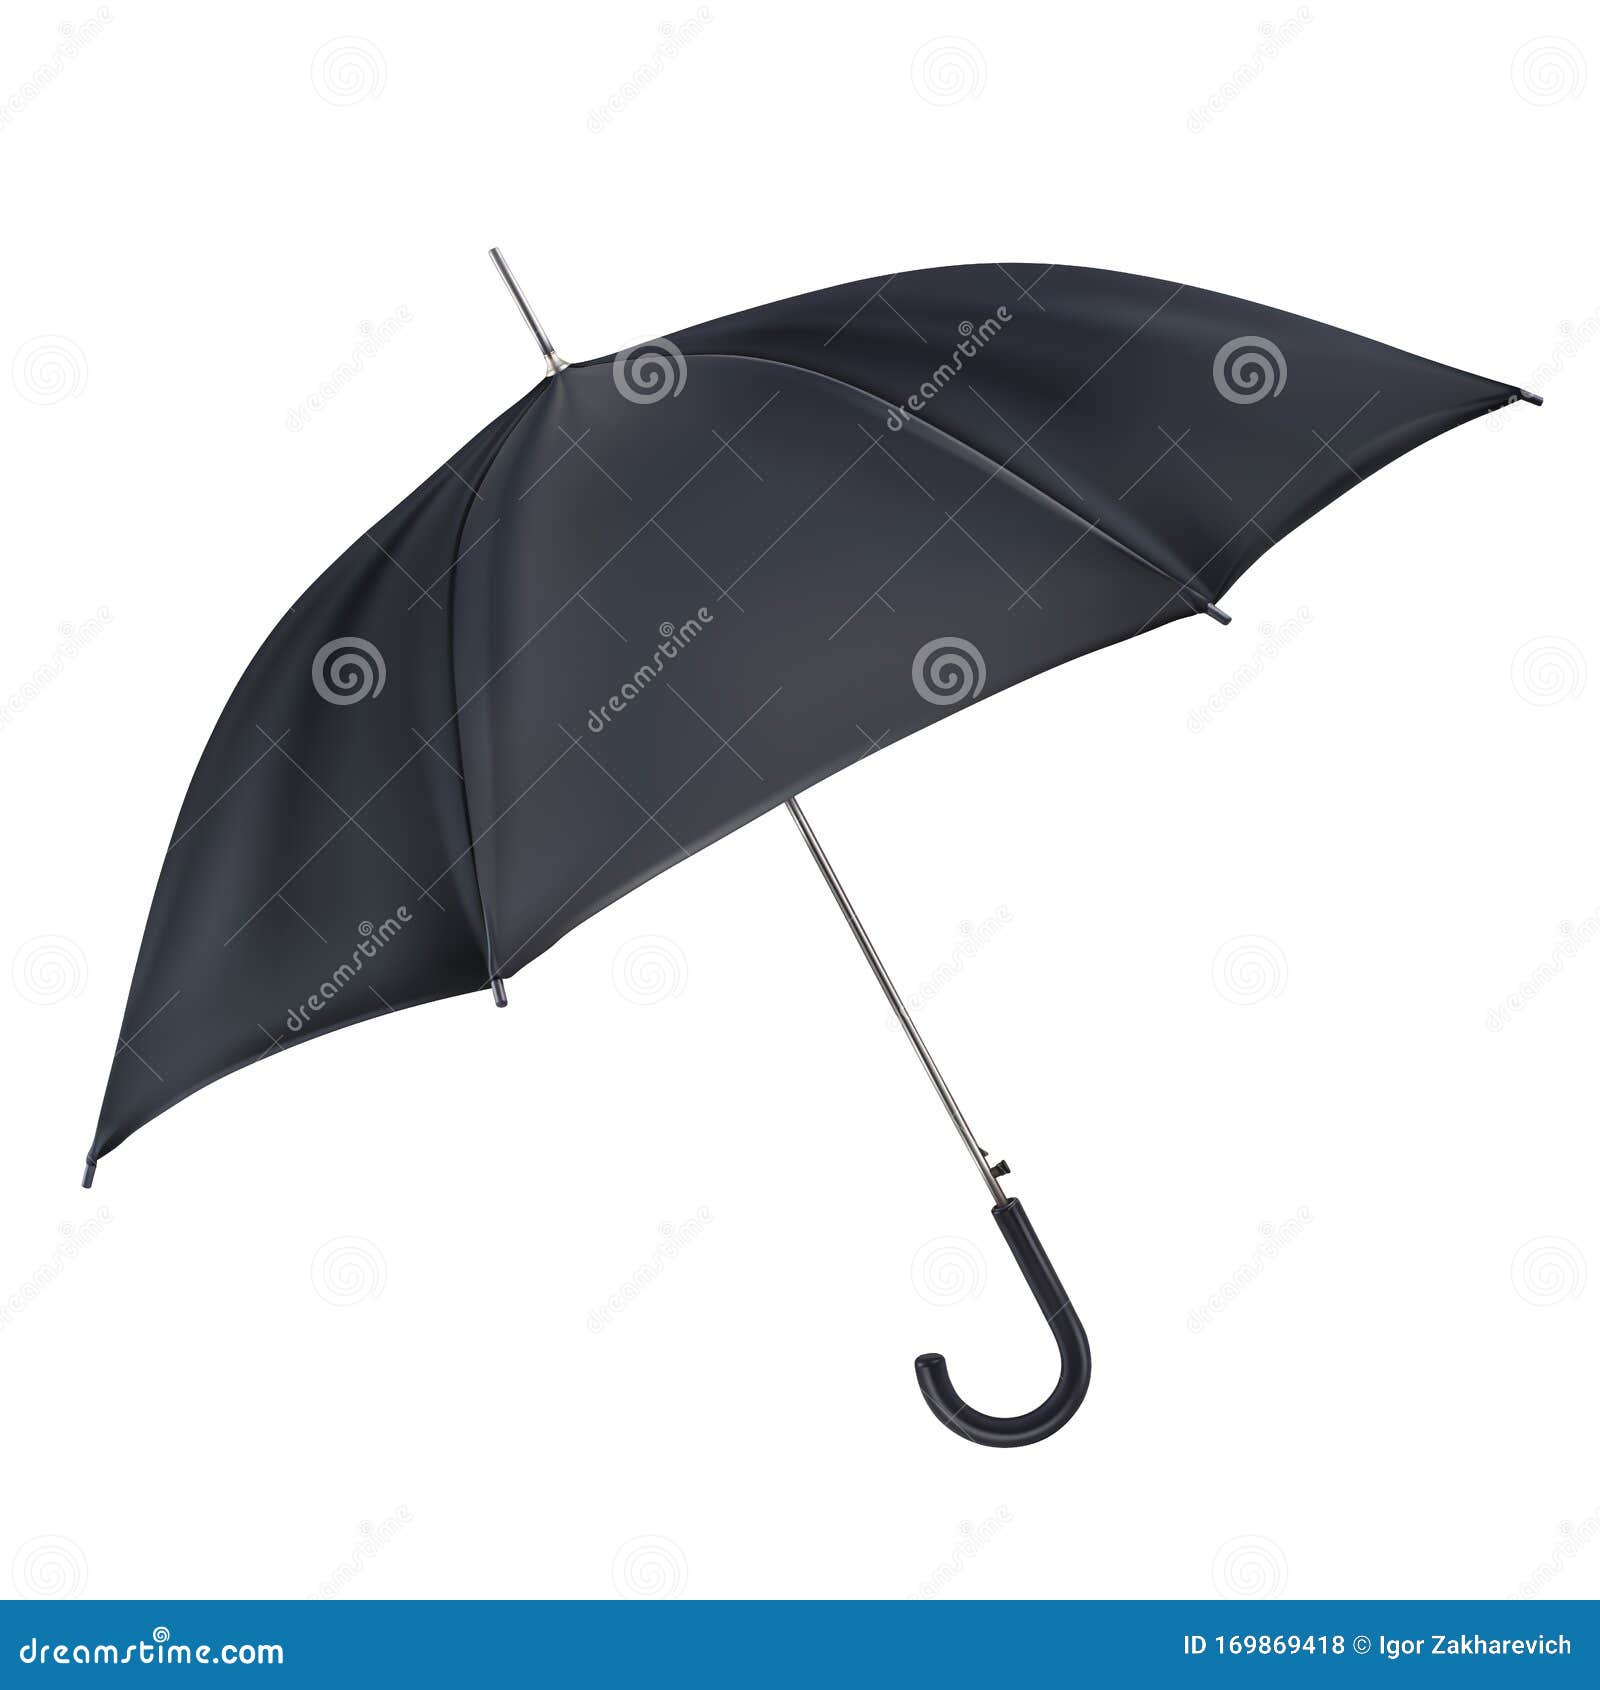 Download Black Open Classic Umbrella In Side View Stock ...